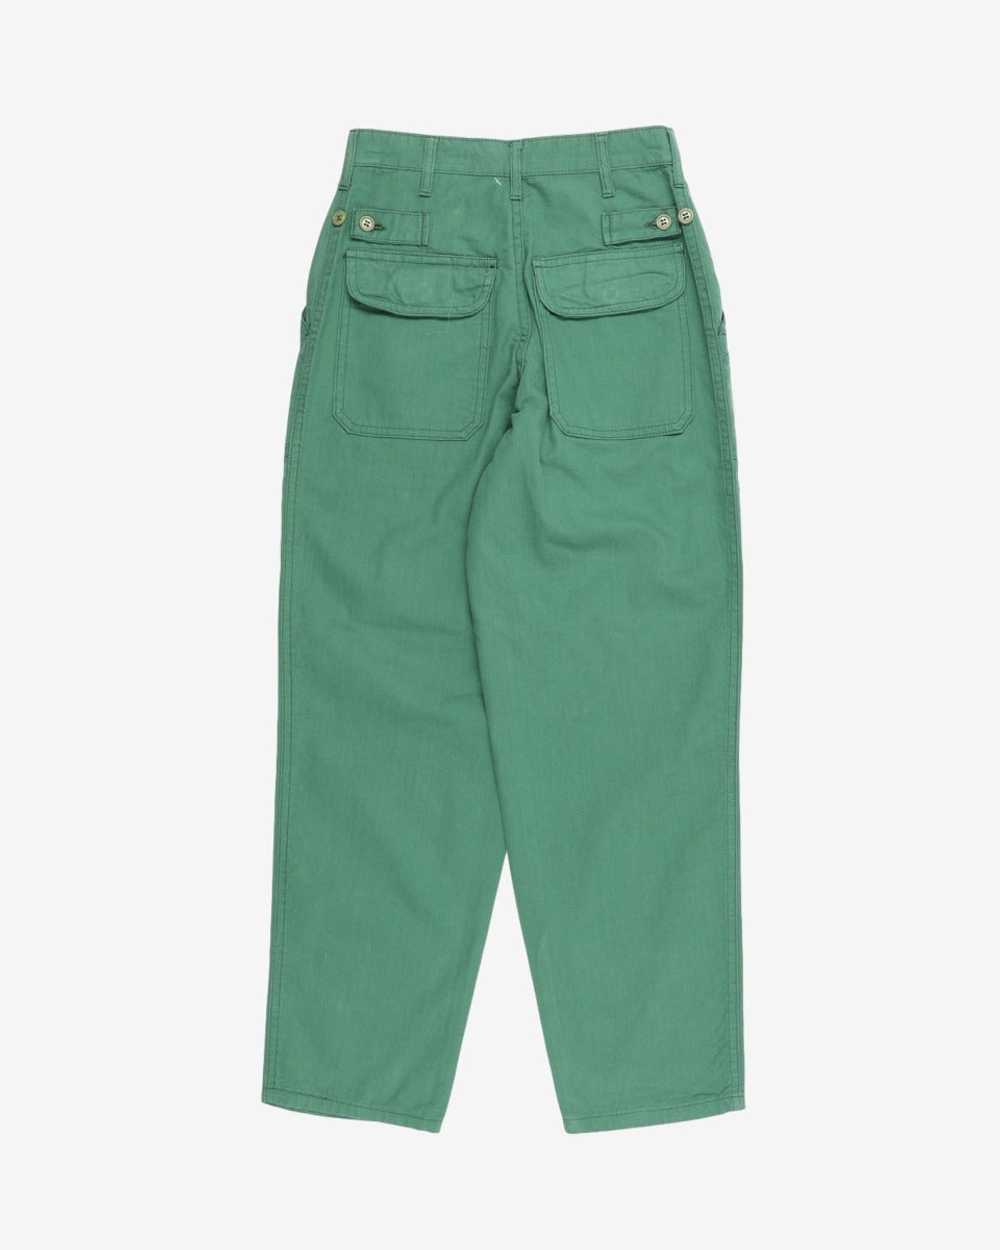 Benetton Deadstock 1980s cargo style trousers - image 5